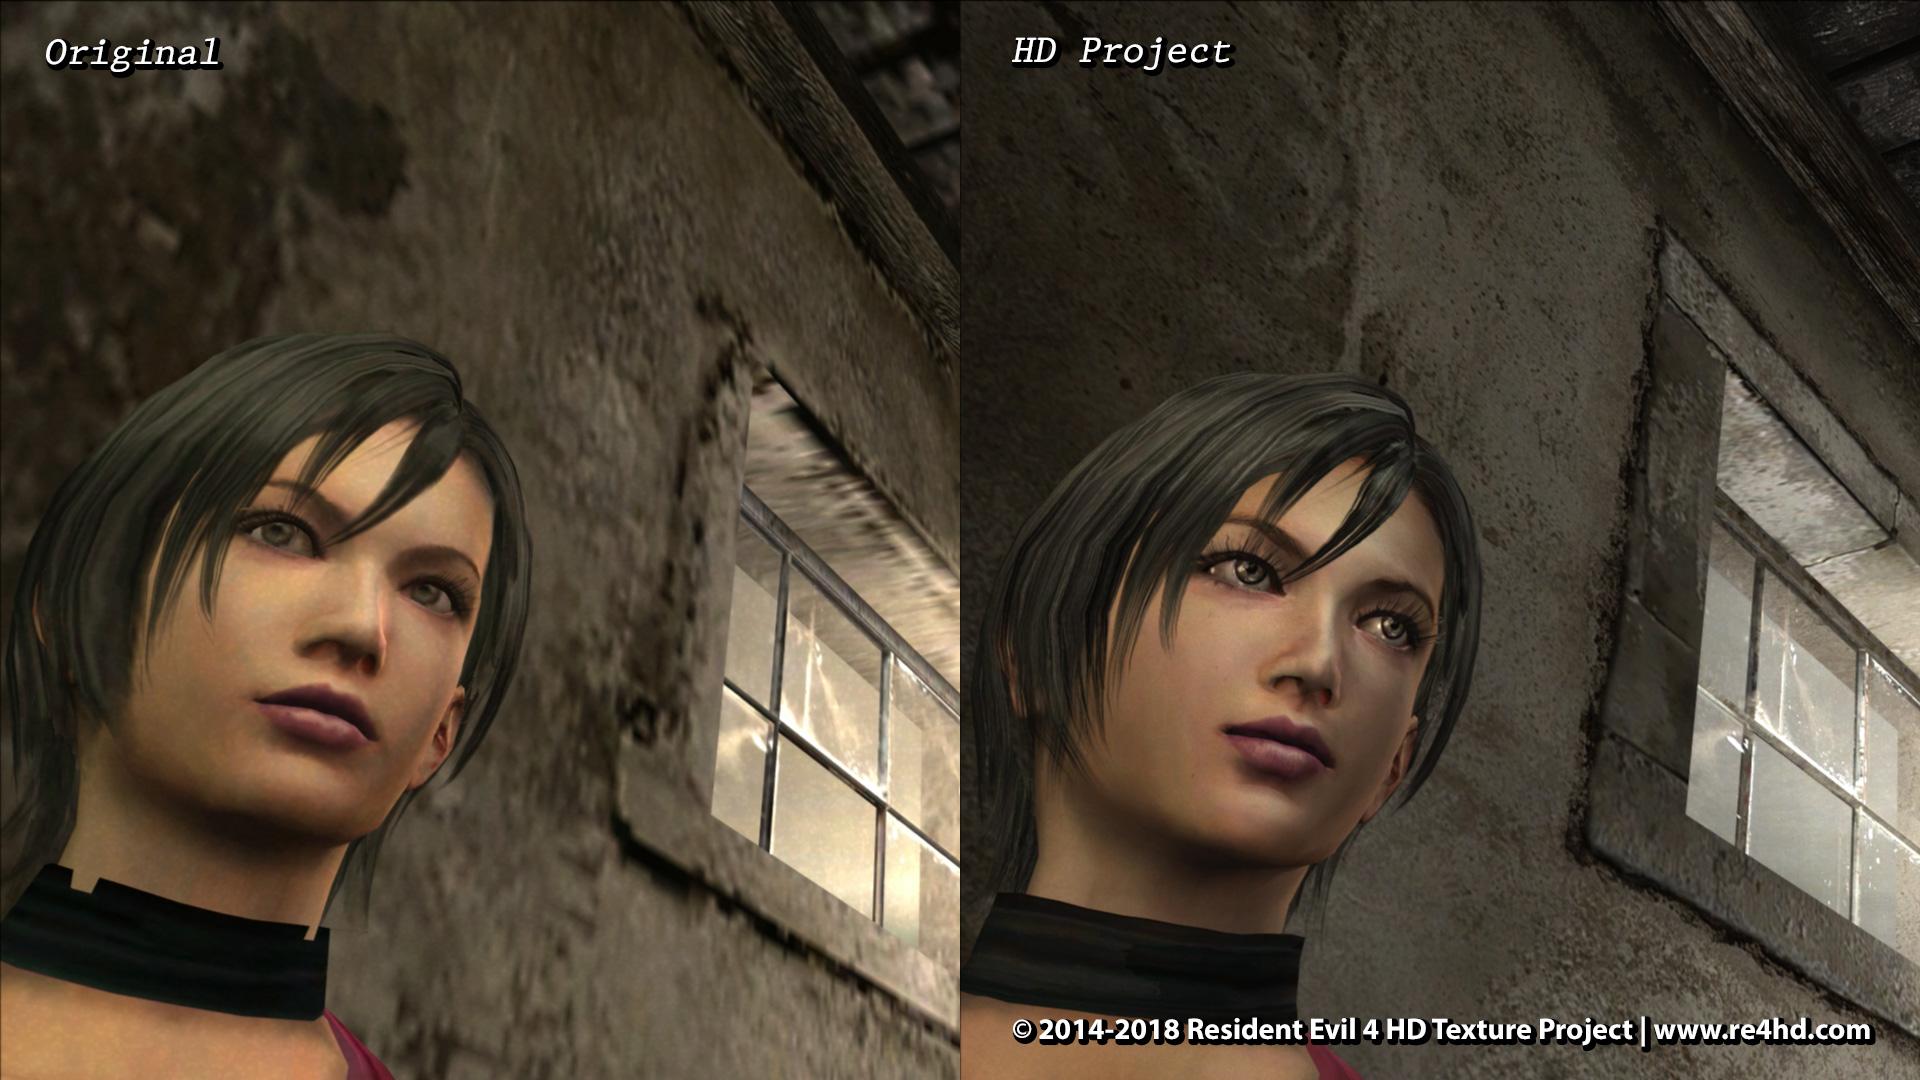 Resident Evil 4 HD Project New Screenshots Showcase Character